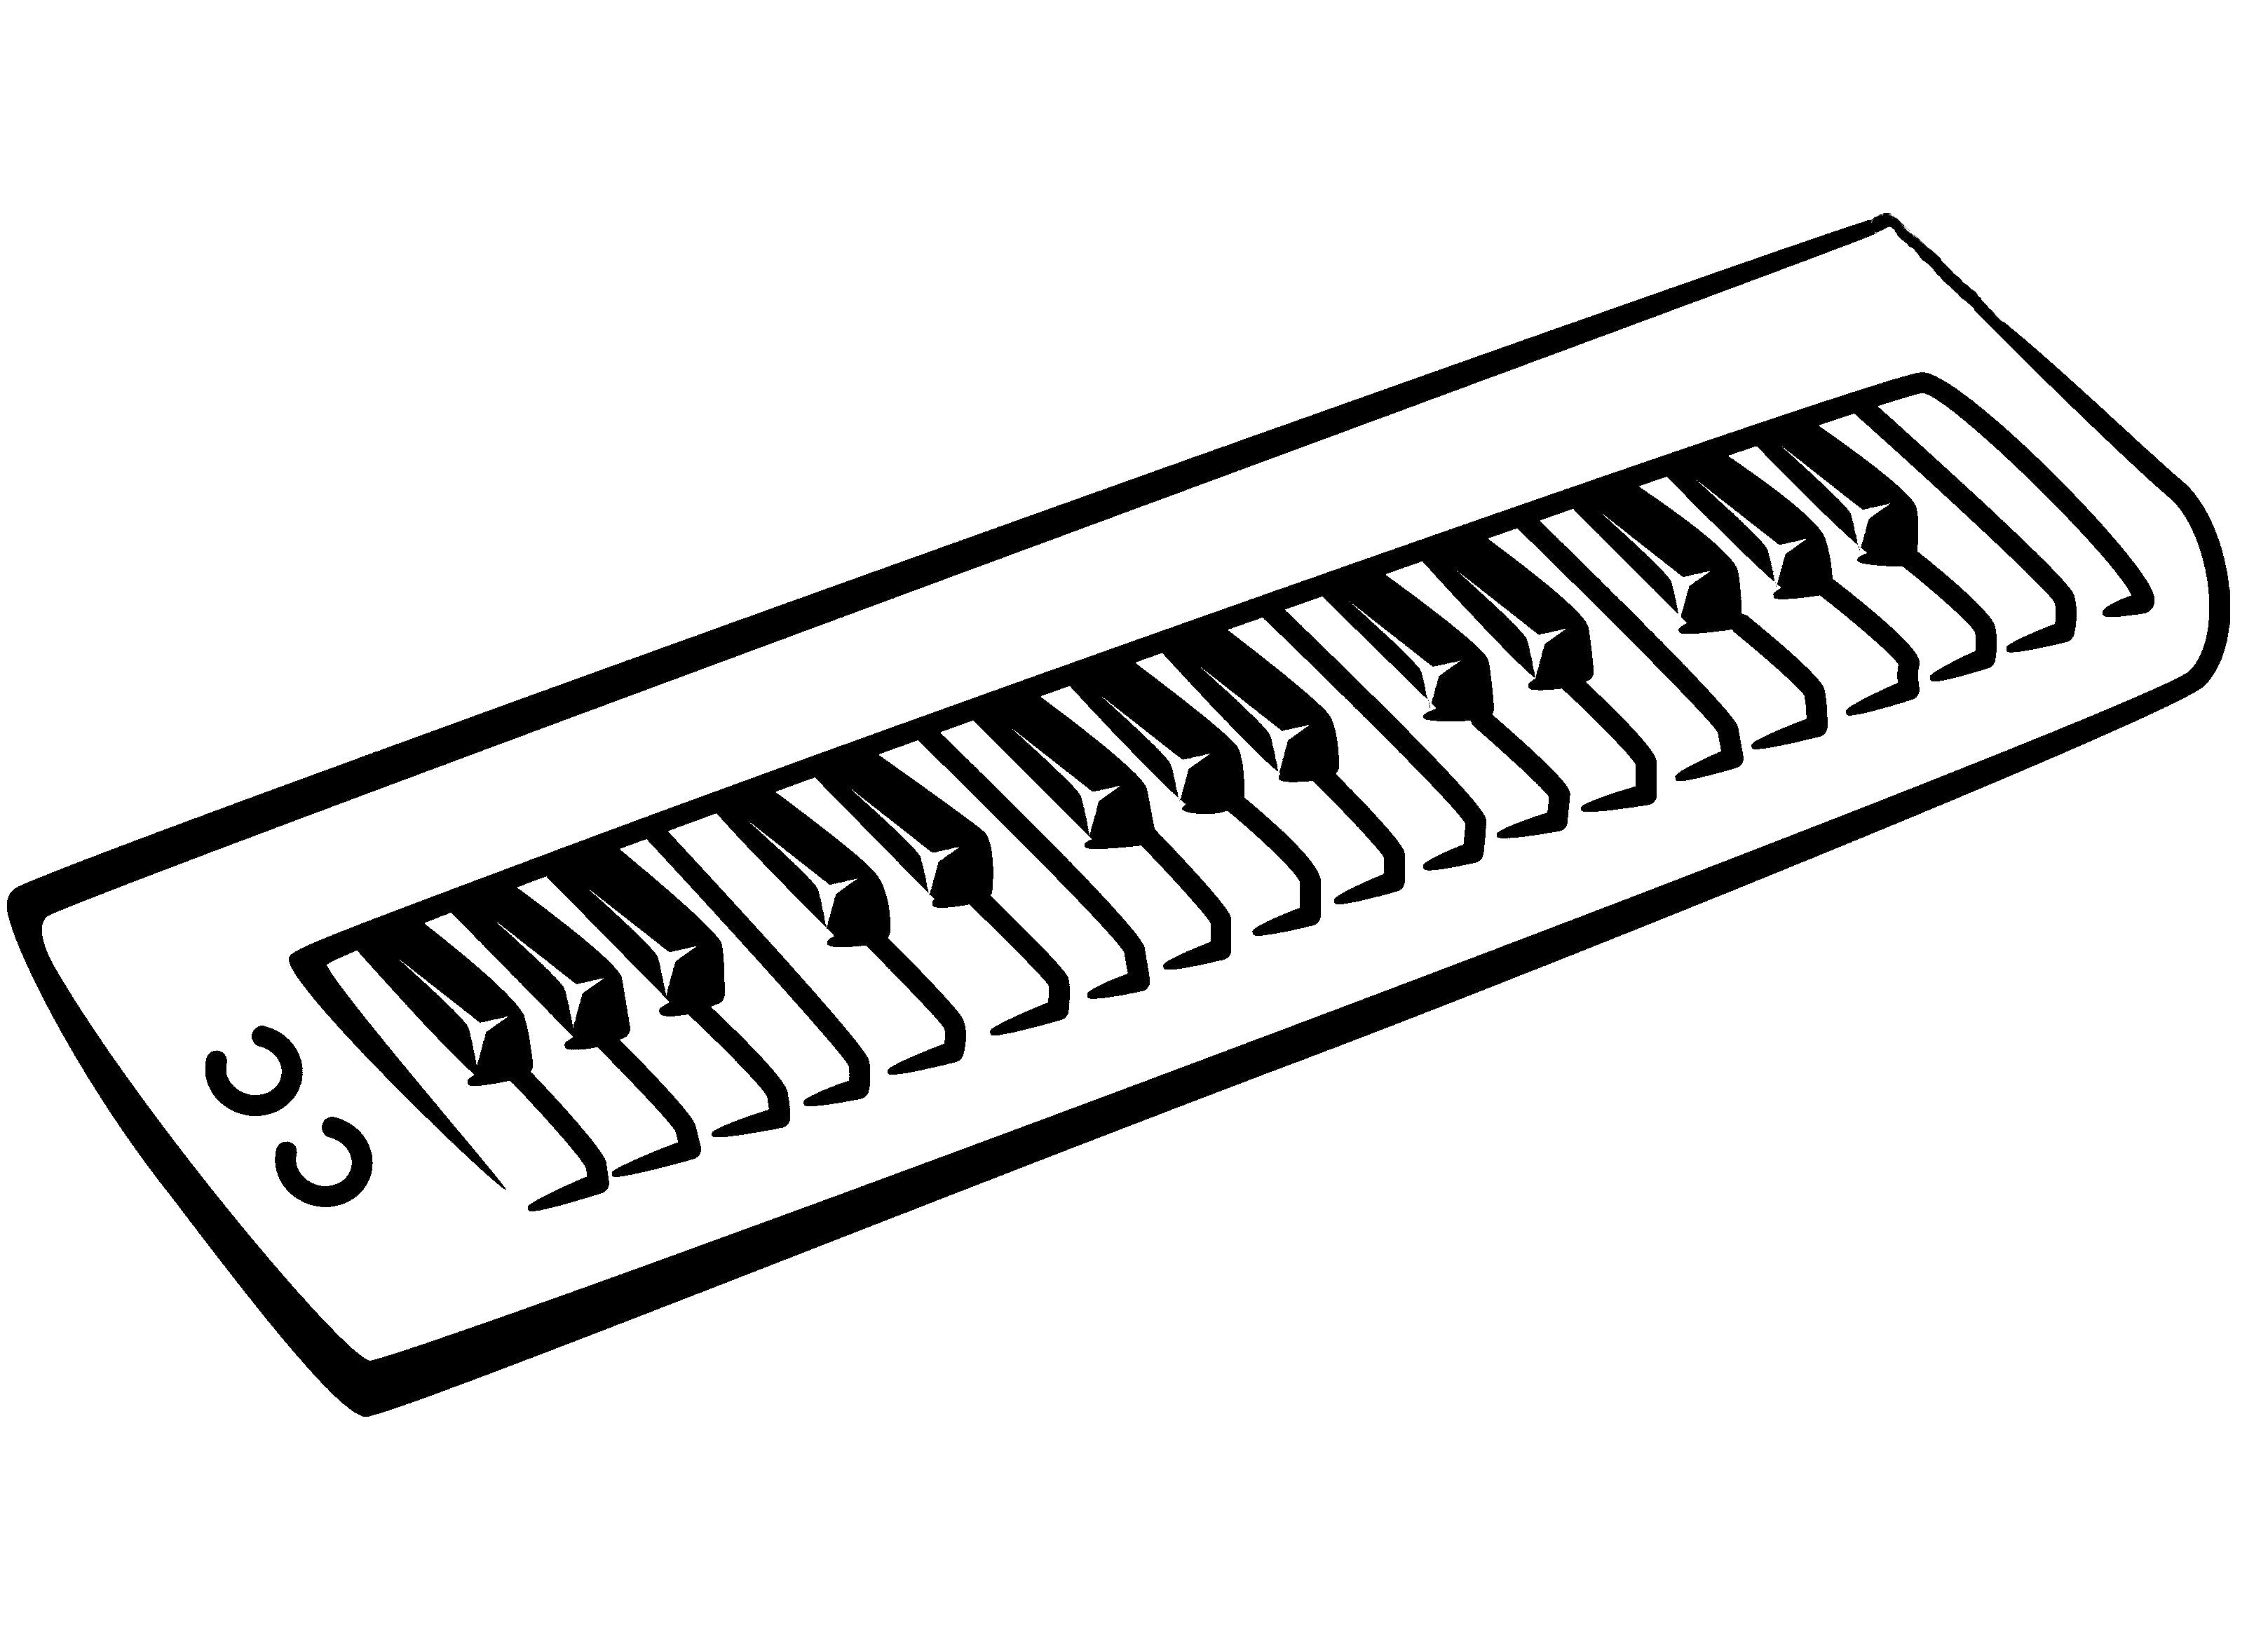 Клавиатура фортепиано раскраска